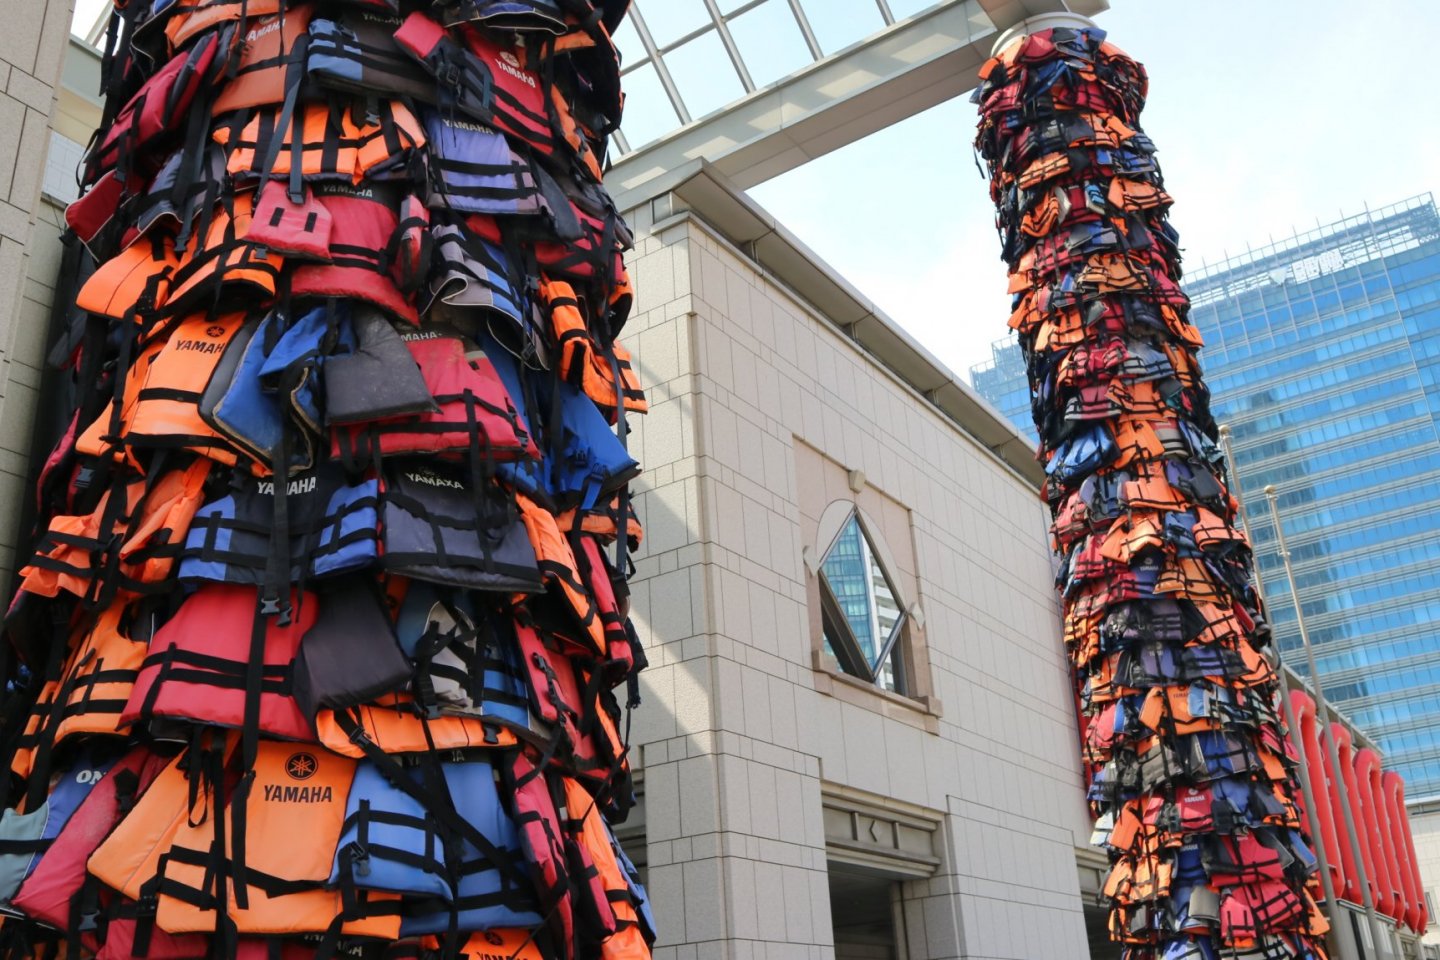 ‘Safe passage’ & ‘Reframe’, by Ai Weiwei installed at Yokohama Museum of Art